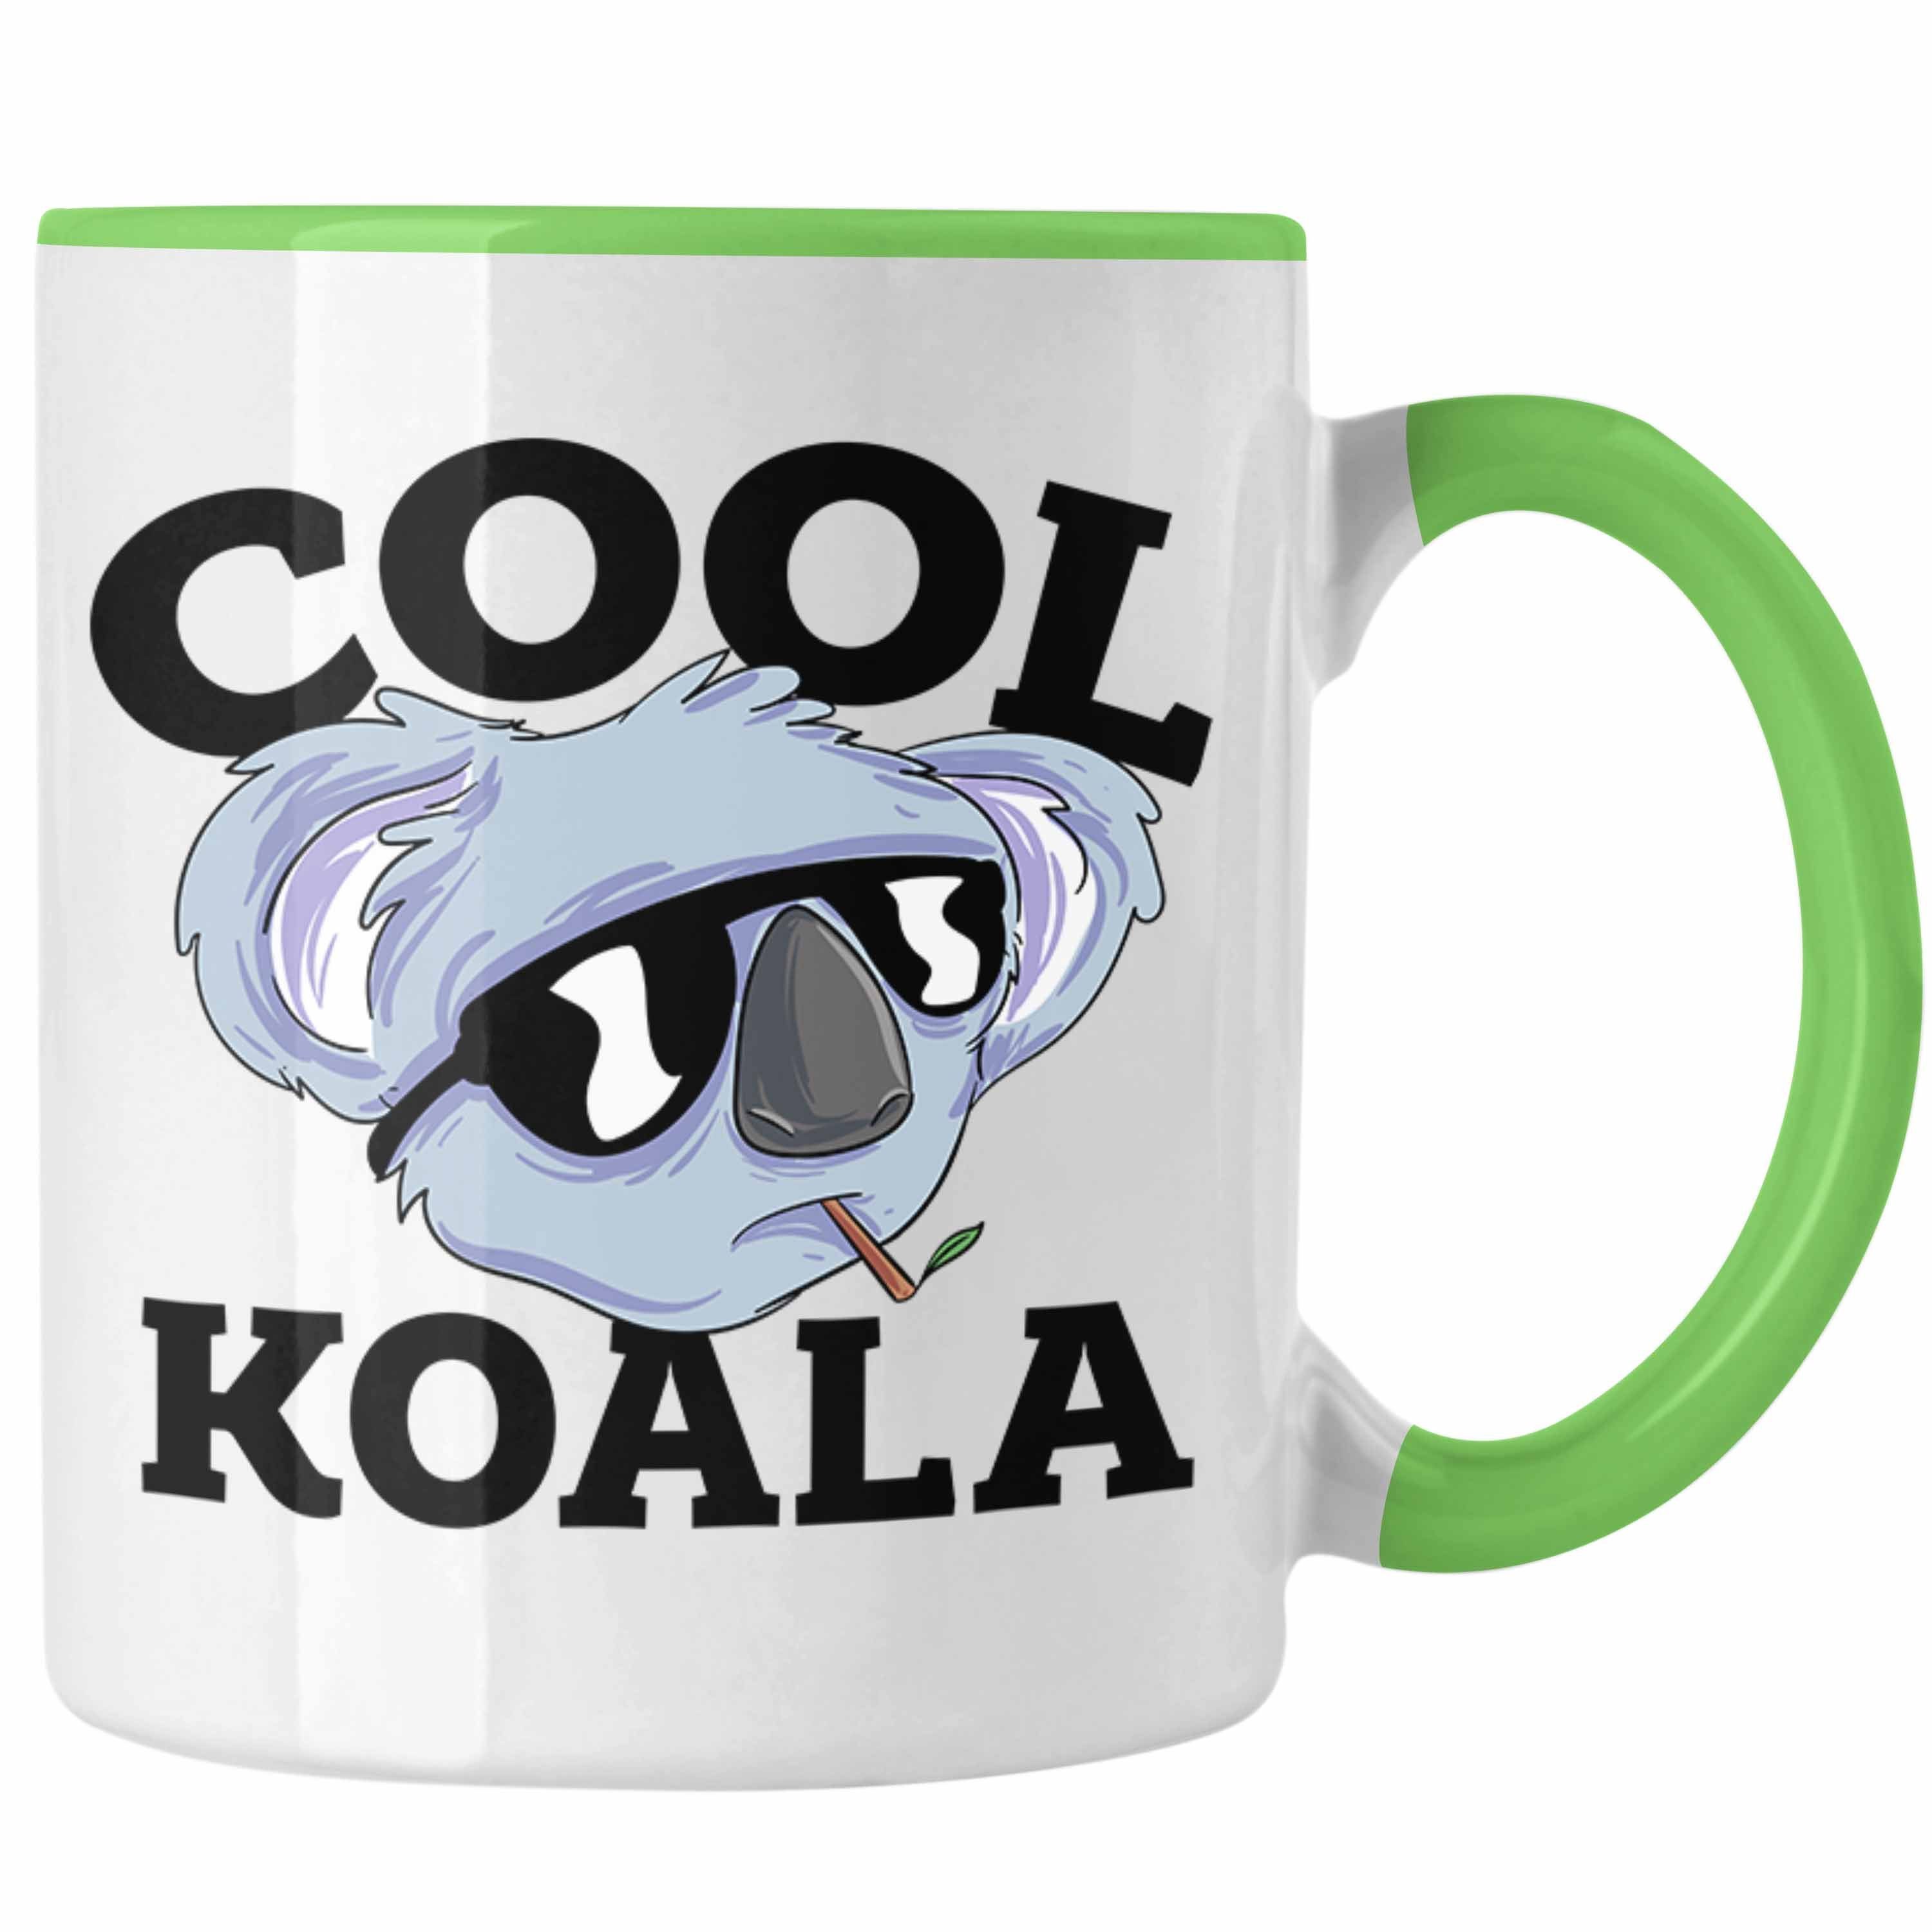 Trendation Tasse Tasse Koala Geschenkidee für Koala-Liebhaber Tasse Koala-Aufdruck Grün